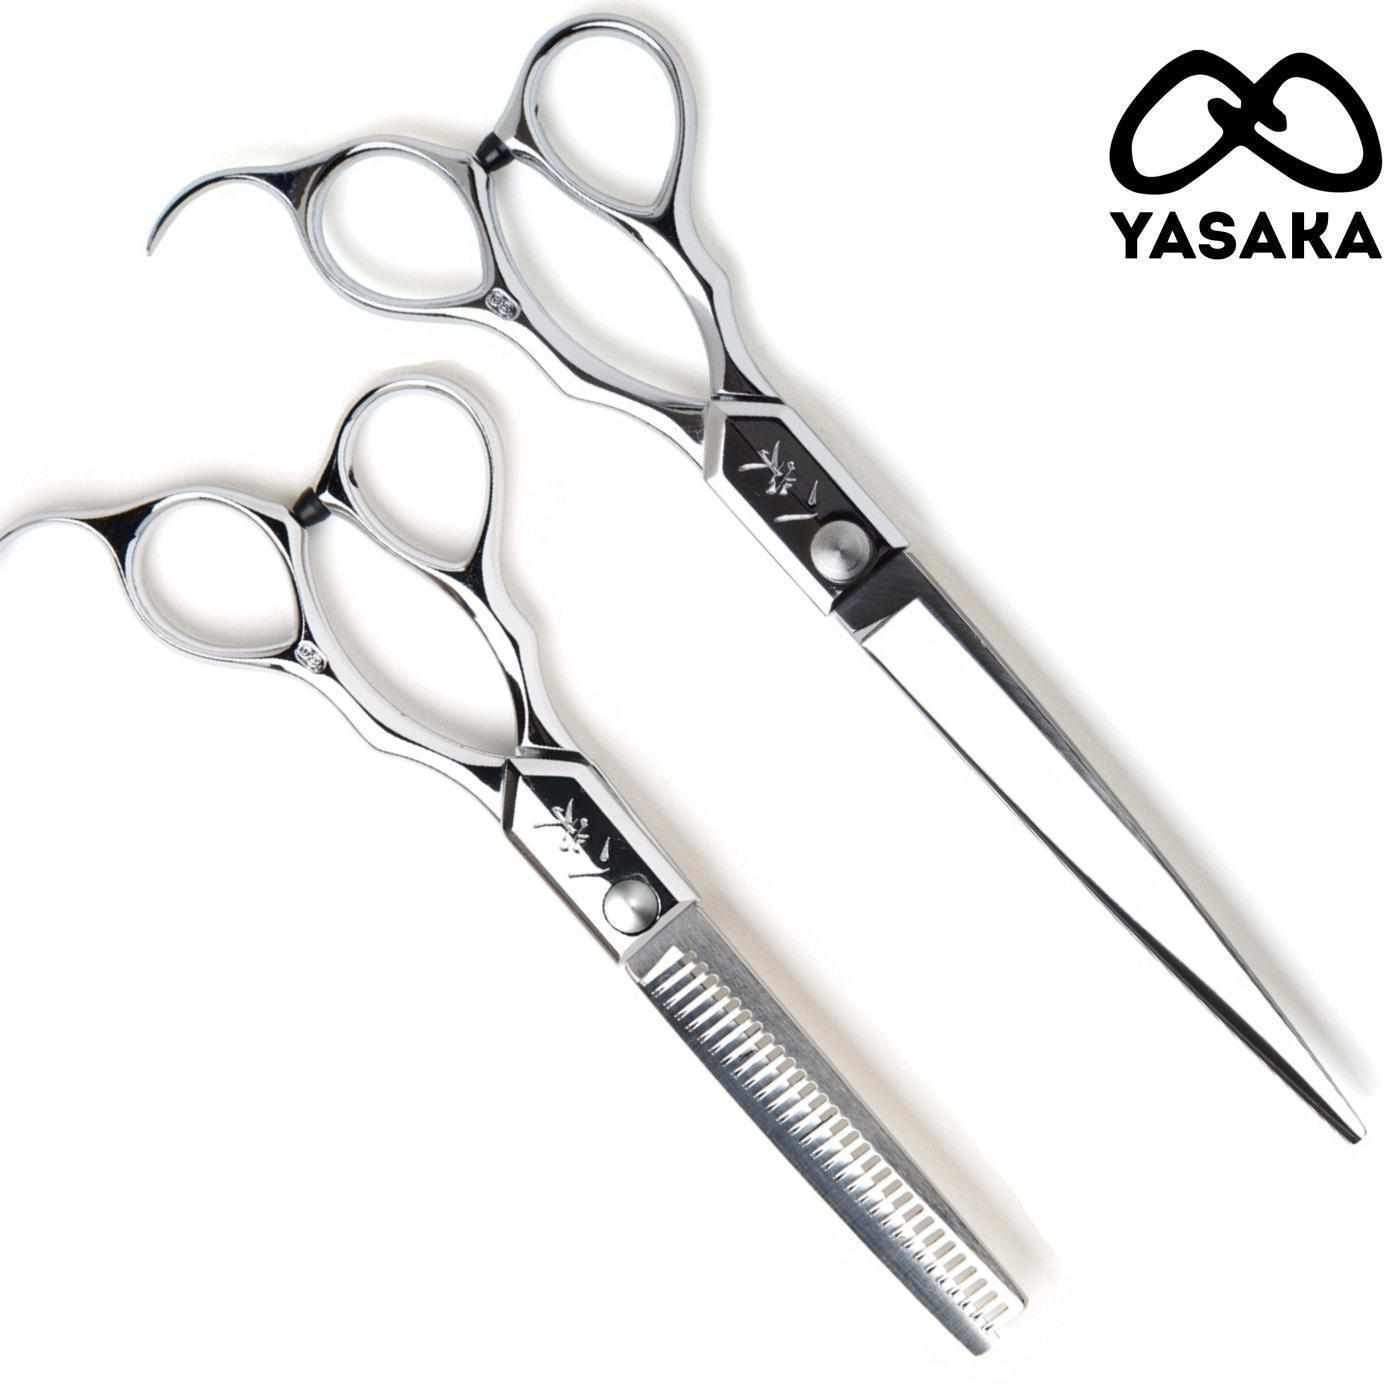 Yasaka Professional Barber Shears Set - Japan Scissors USA